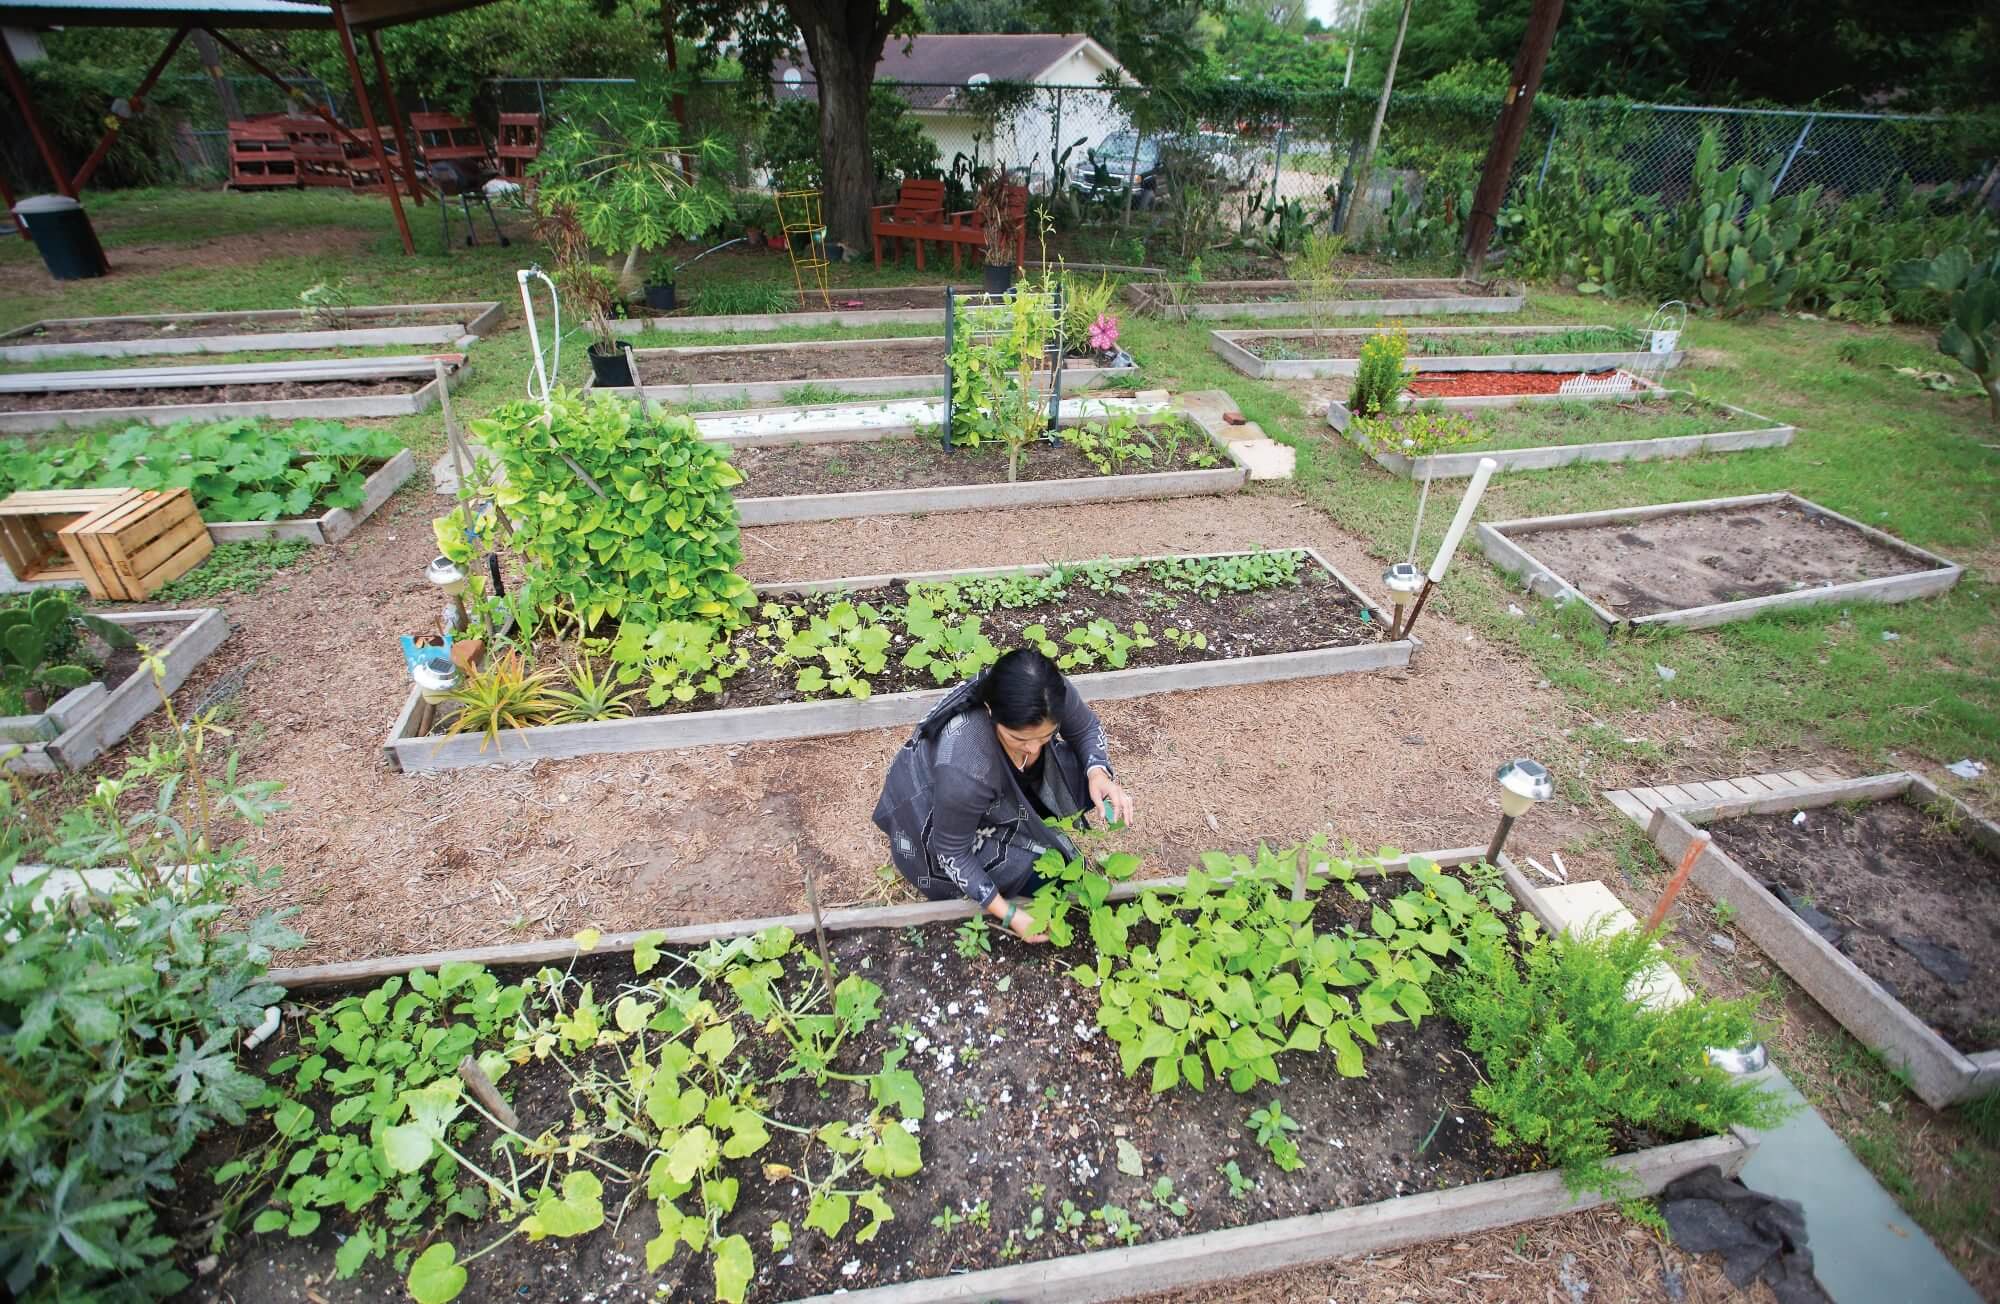 Veronica Rosenbaum, director of the Brownsville Wellness Coalition, works in a community garden.